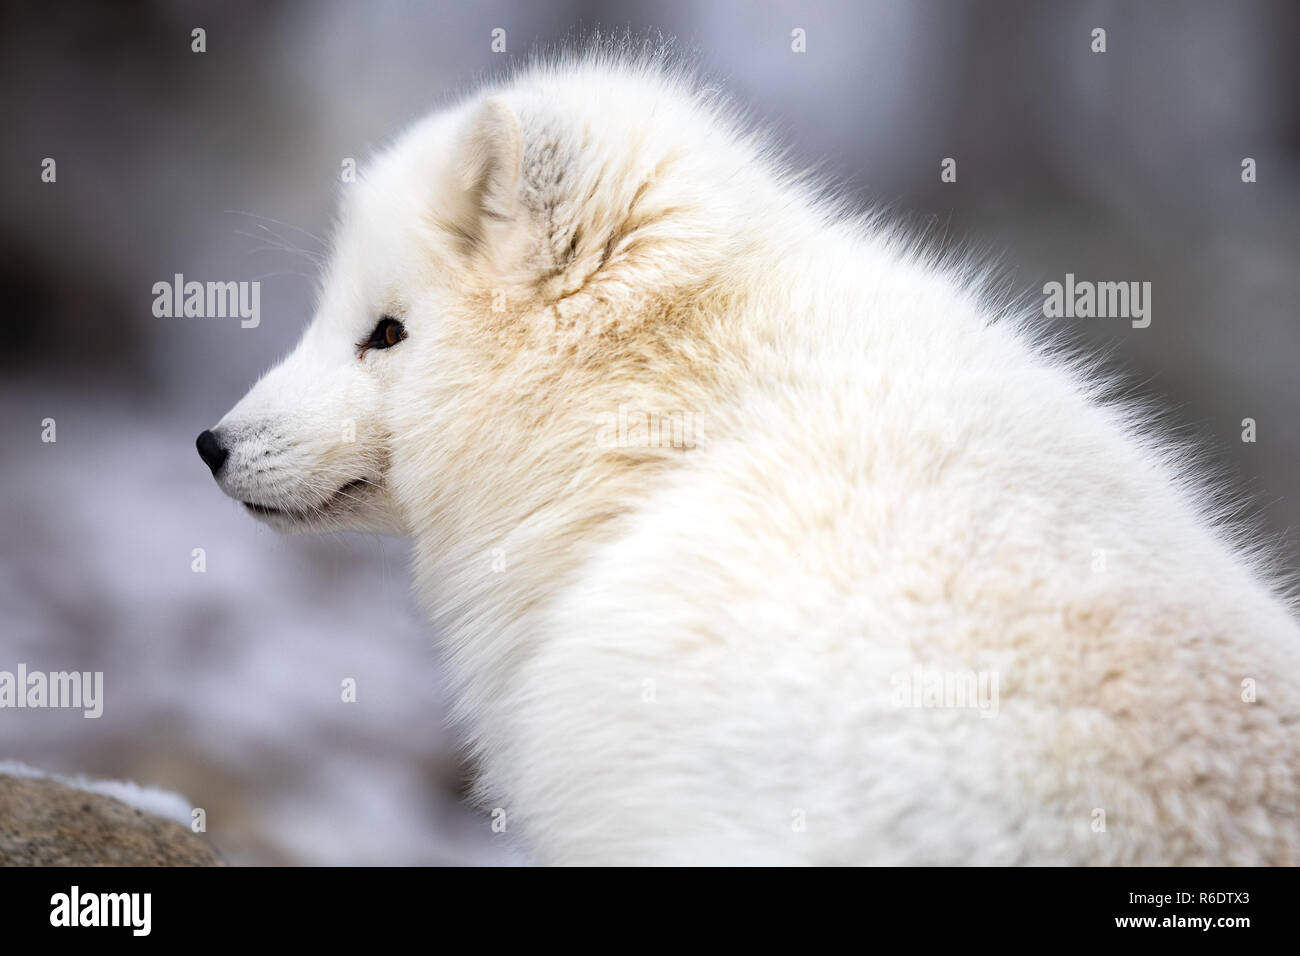 Close-up de zorro ártico en abrigo blanco sentado Foto de stock